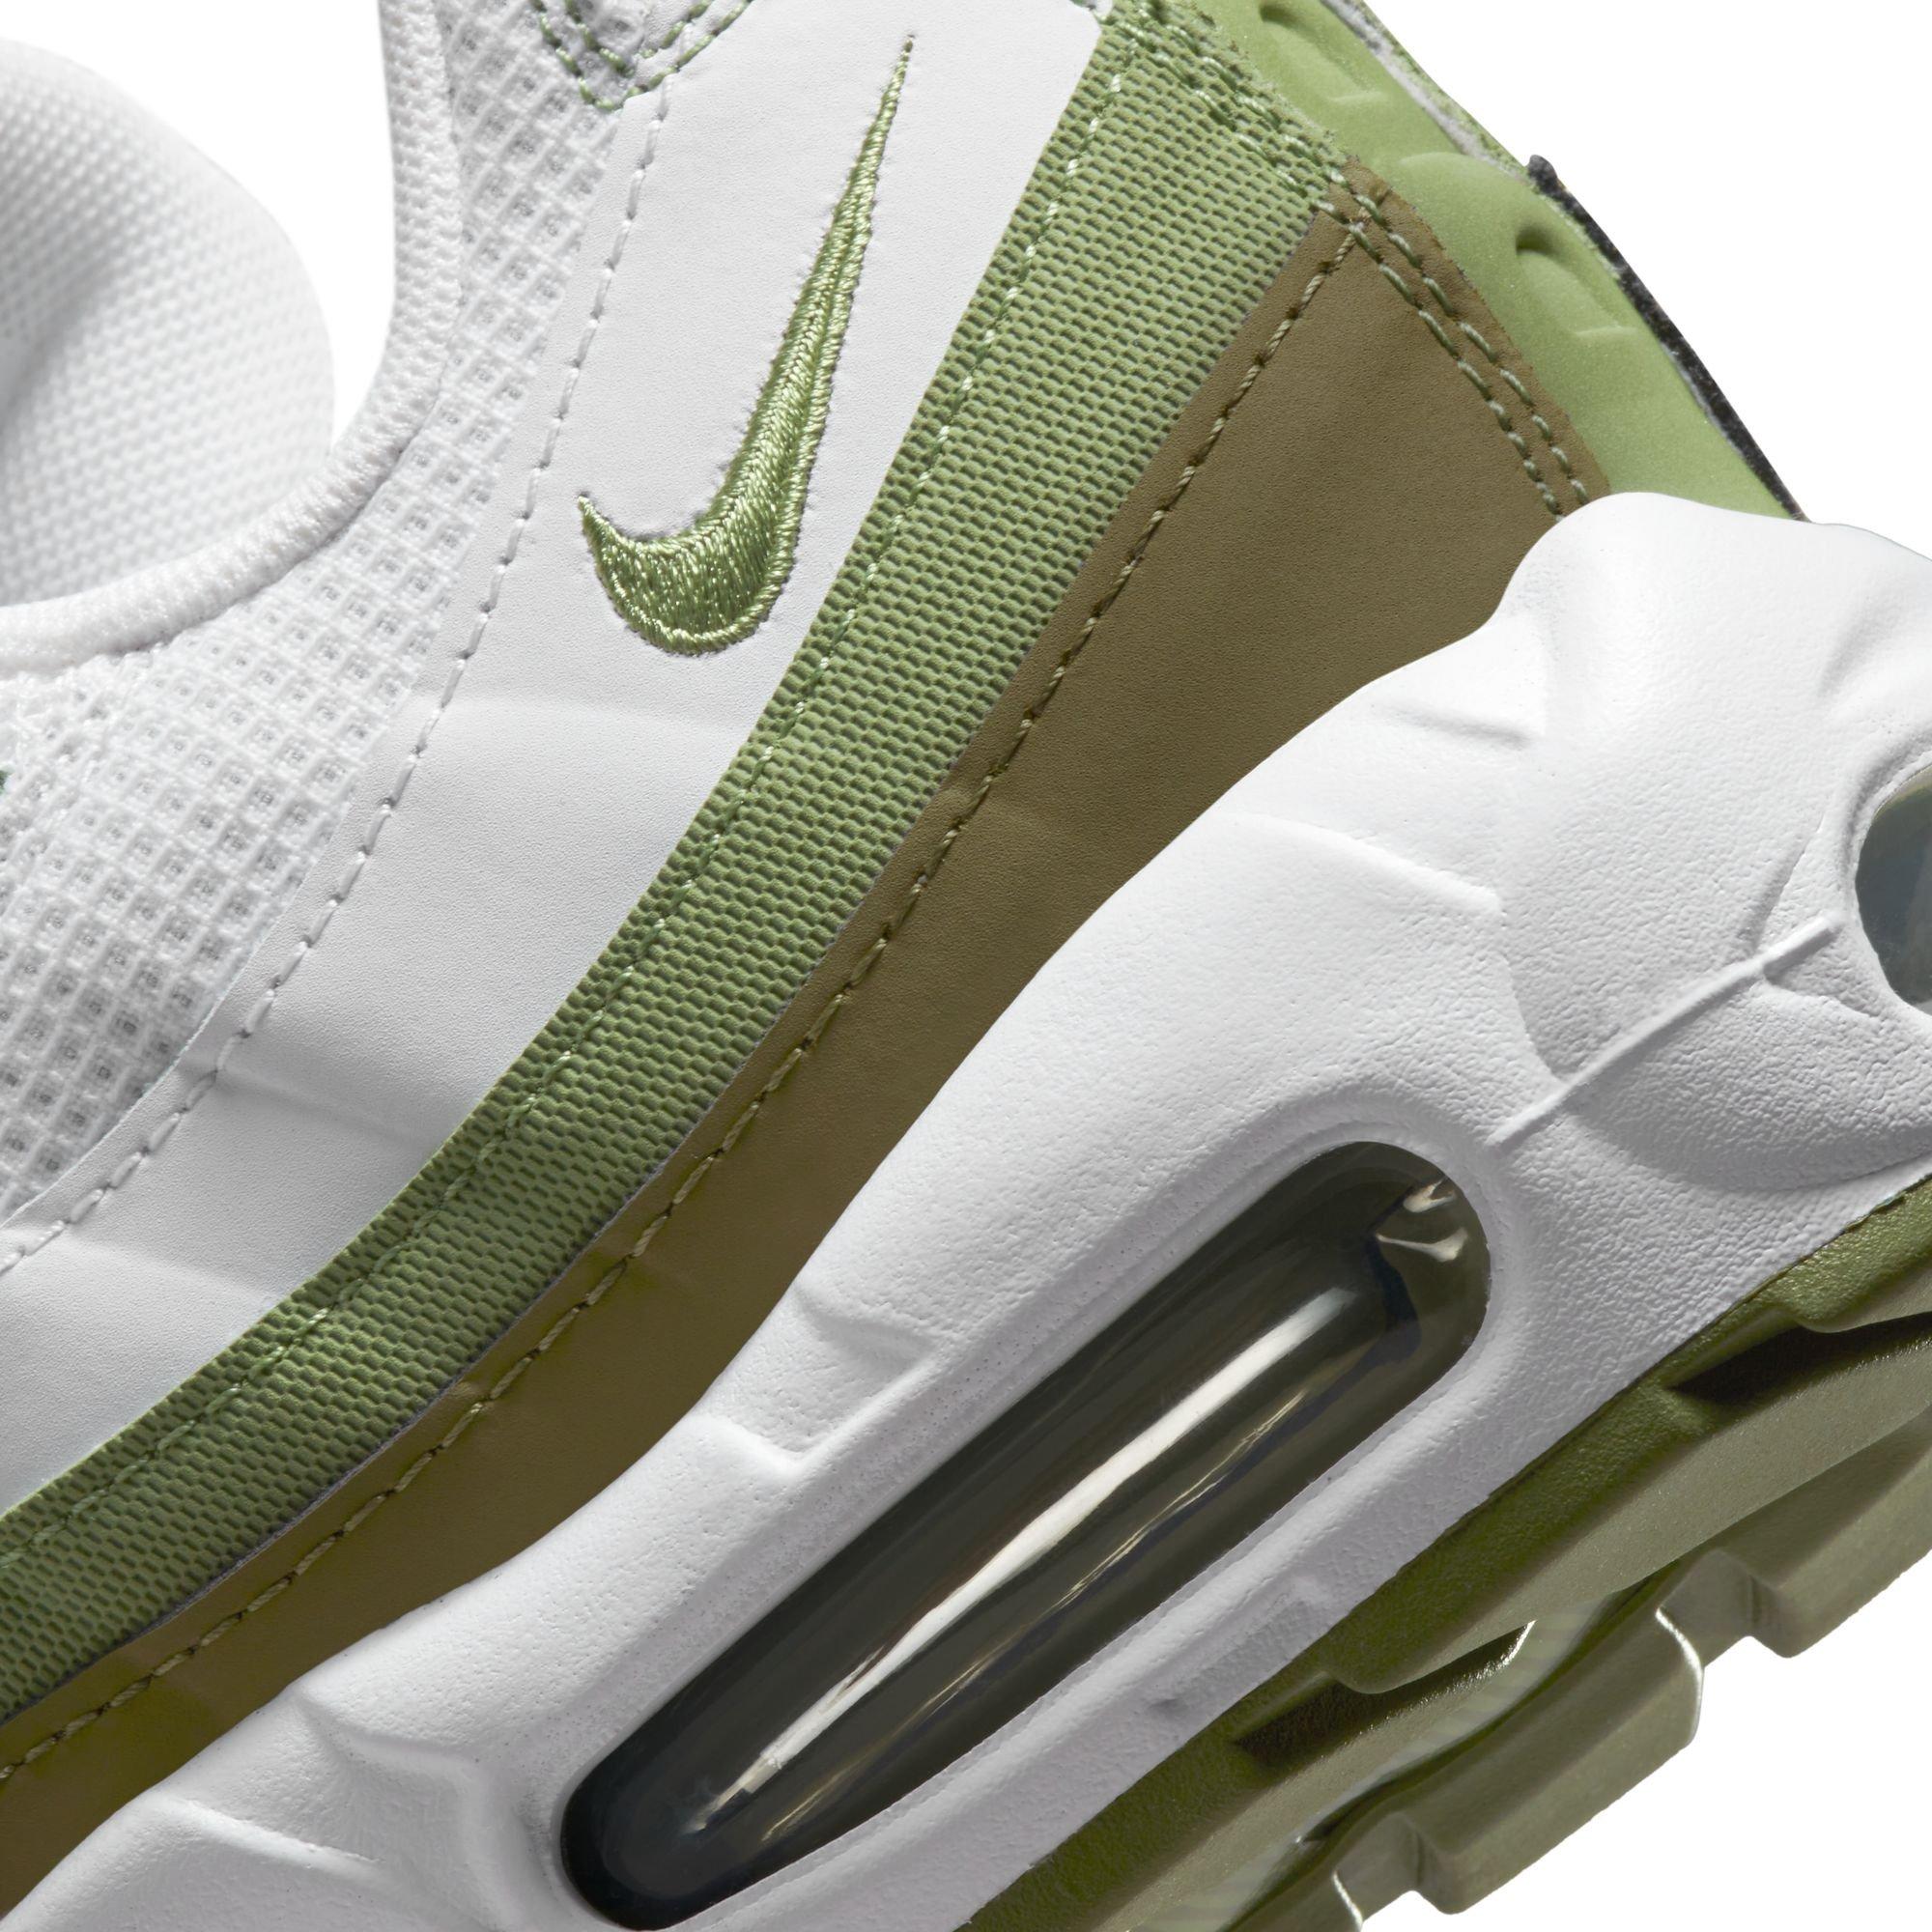 code Pellen Wedstrijd Nike Air Max 95 "White/Oil Green/Medium Olive" Men's Shoe